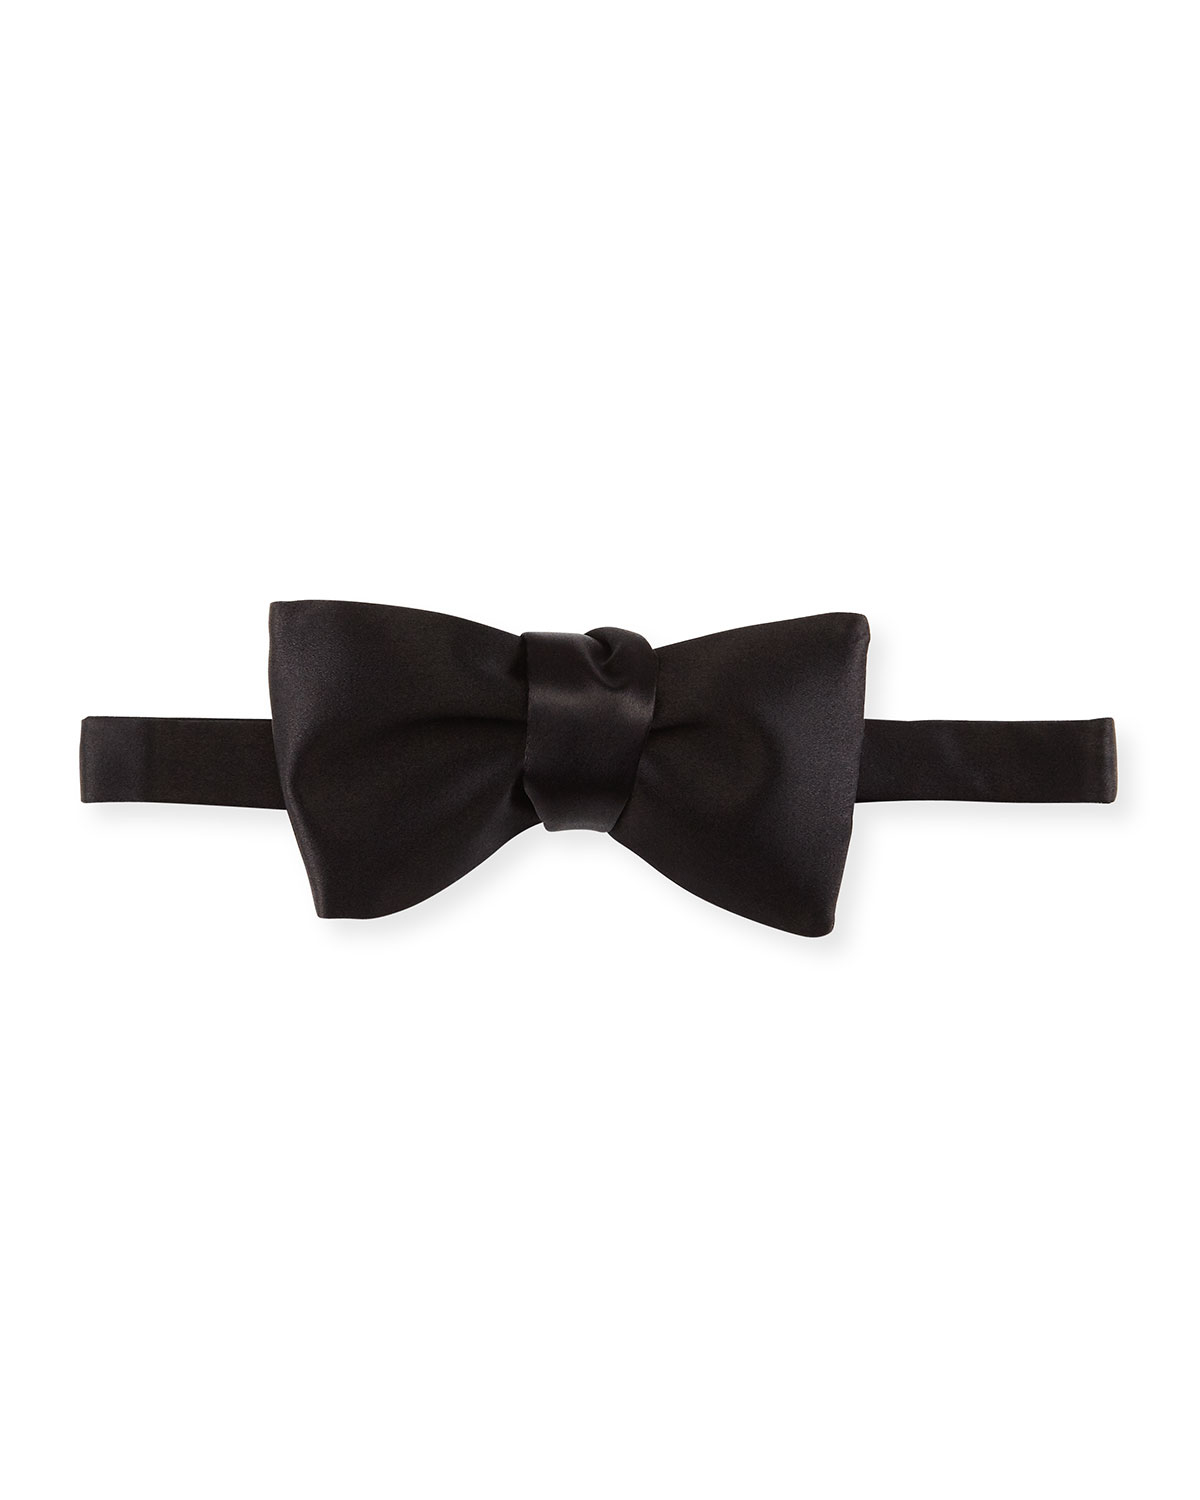 Tom ford black satin bow tie #5